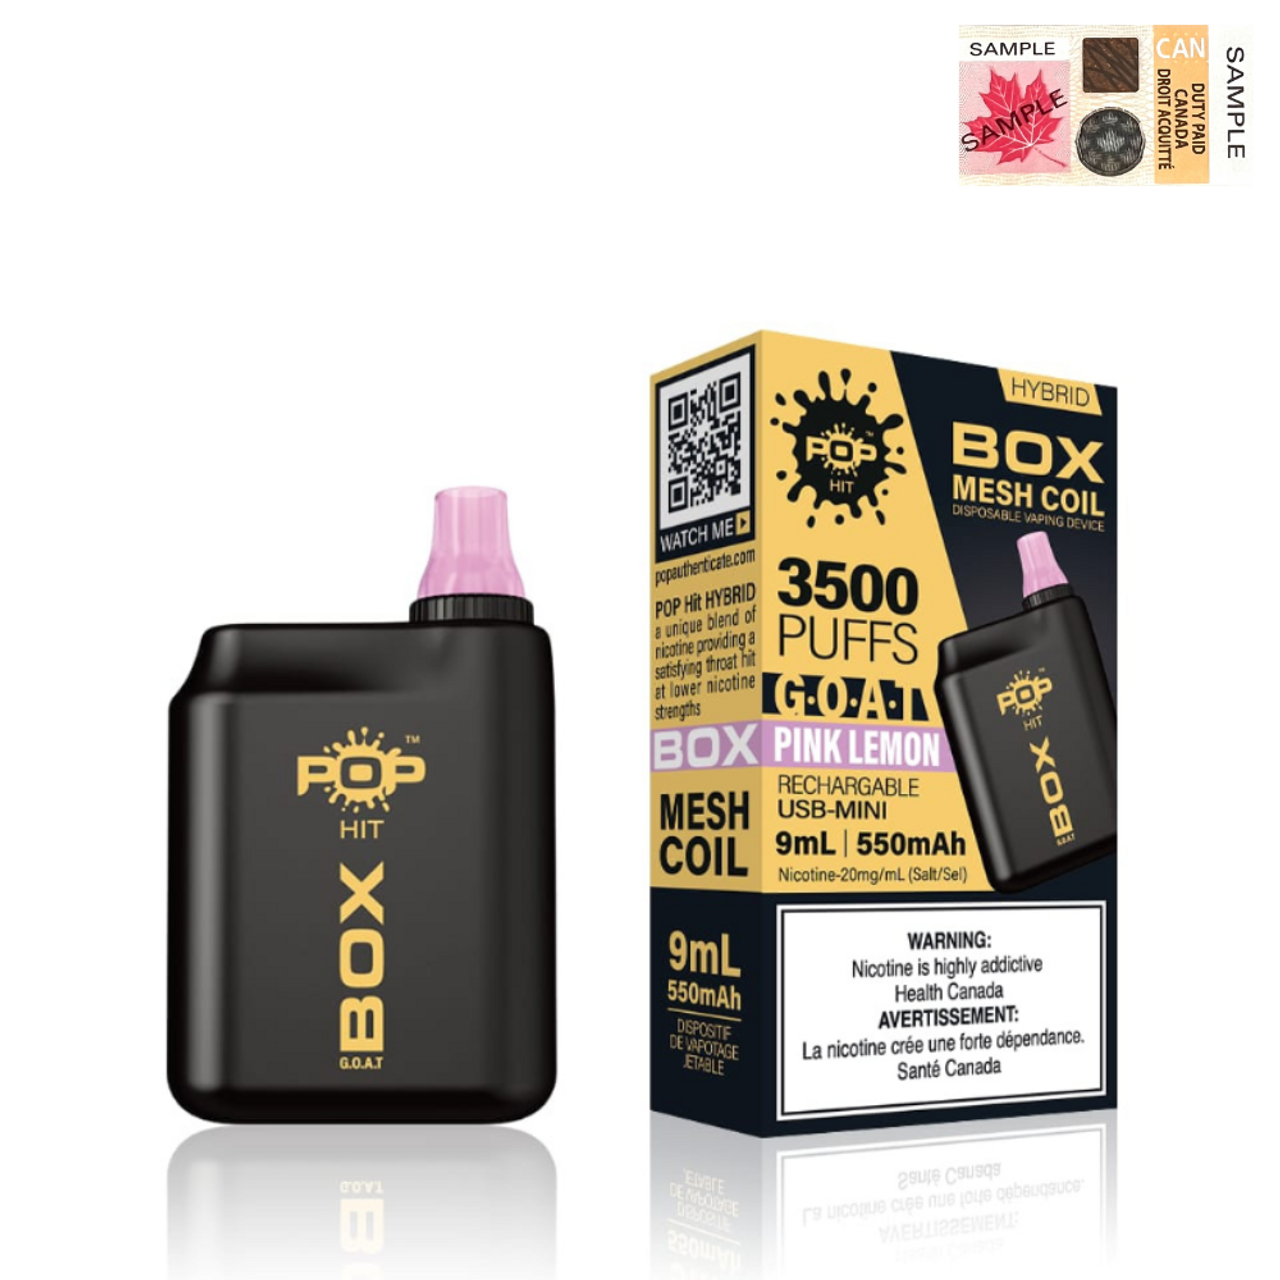 (Stamped) Pink Lemon Pop Hybrid Box G.O.A.T 3500 Puffs Disposable Vape Ct-5